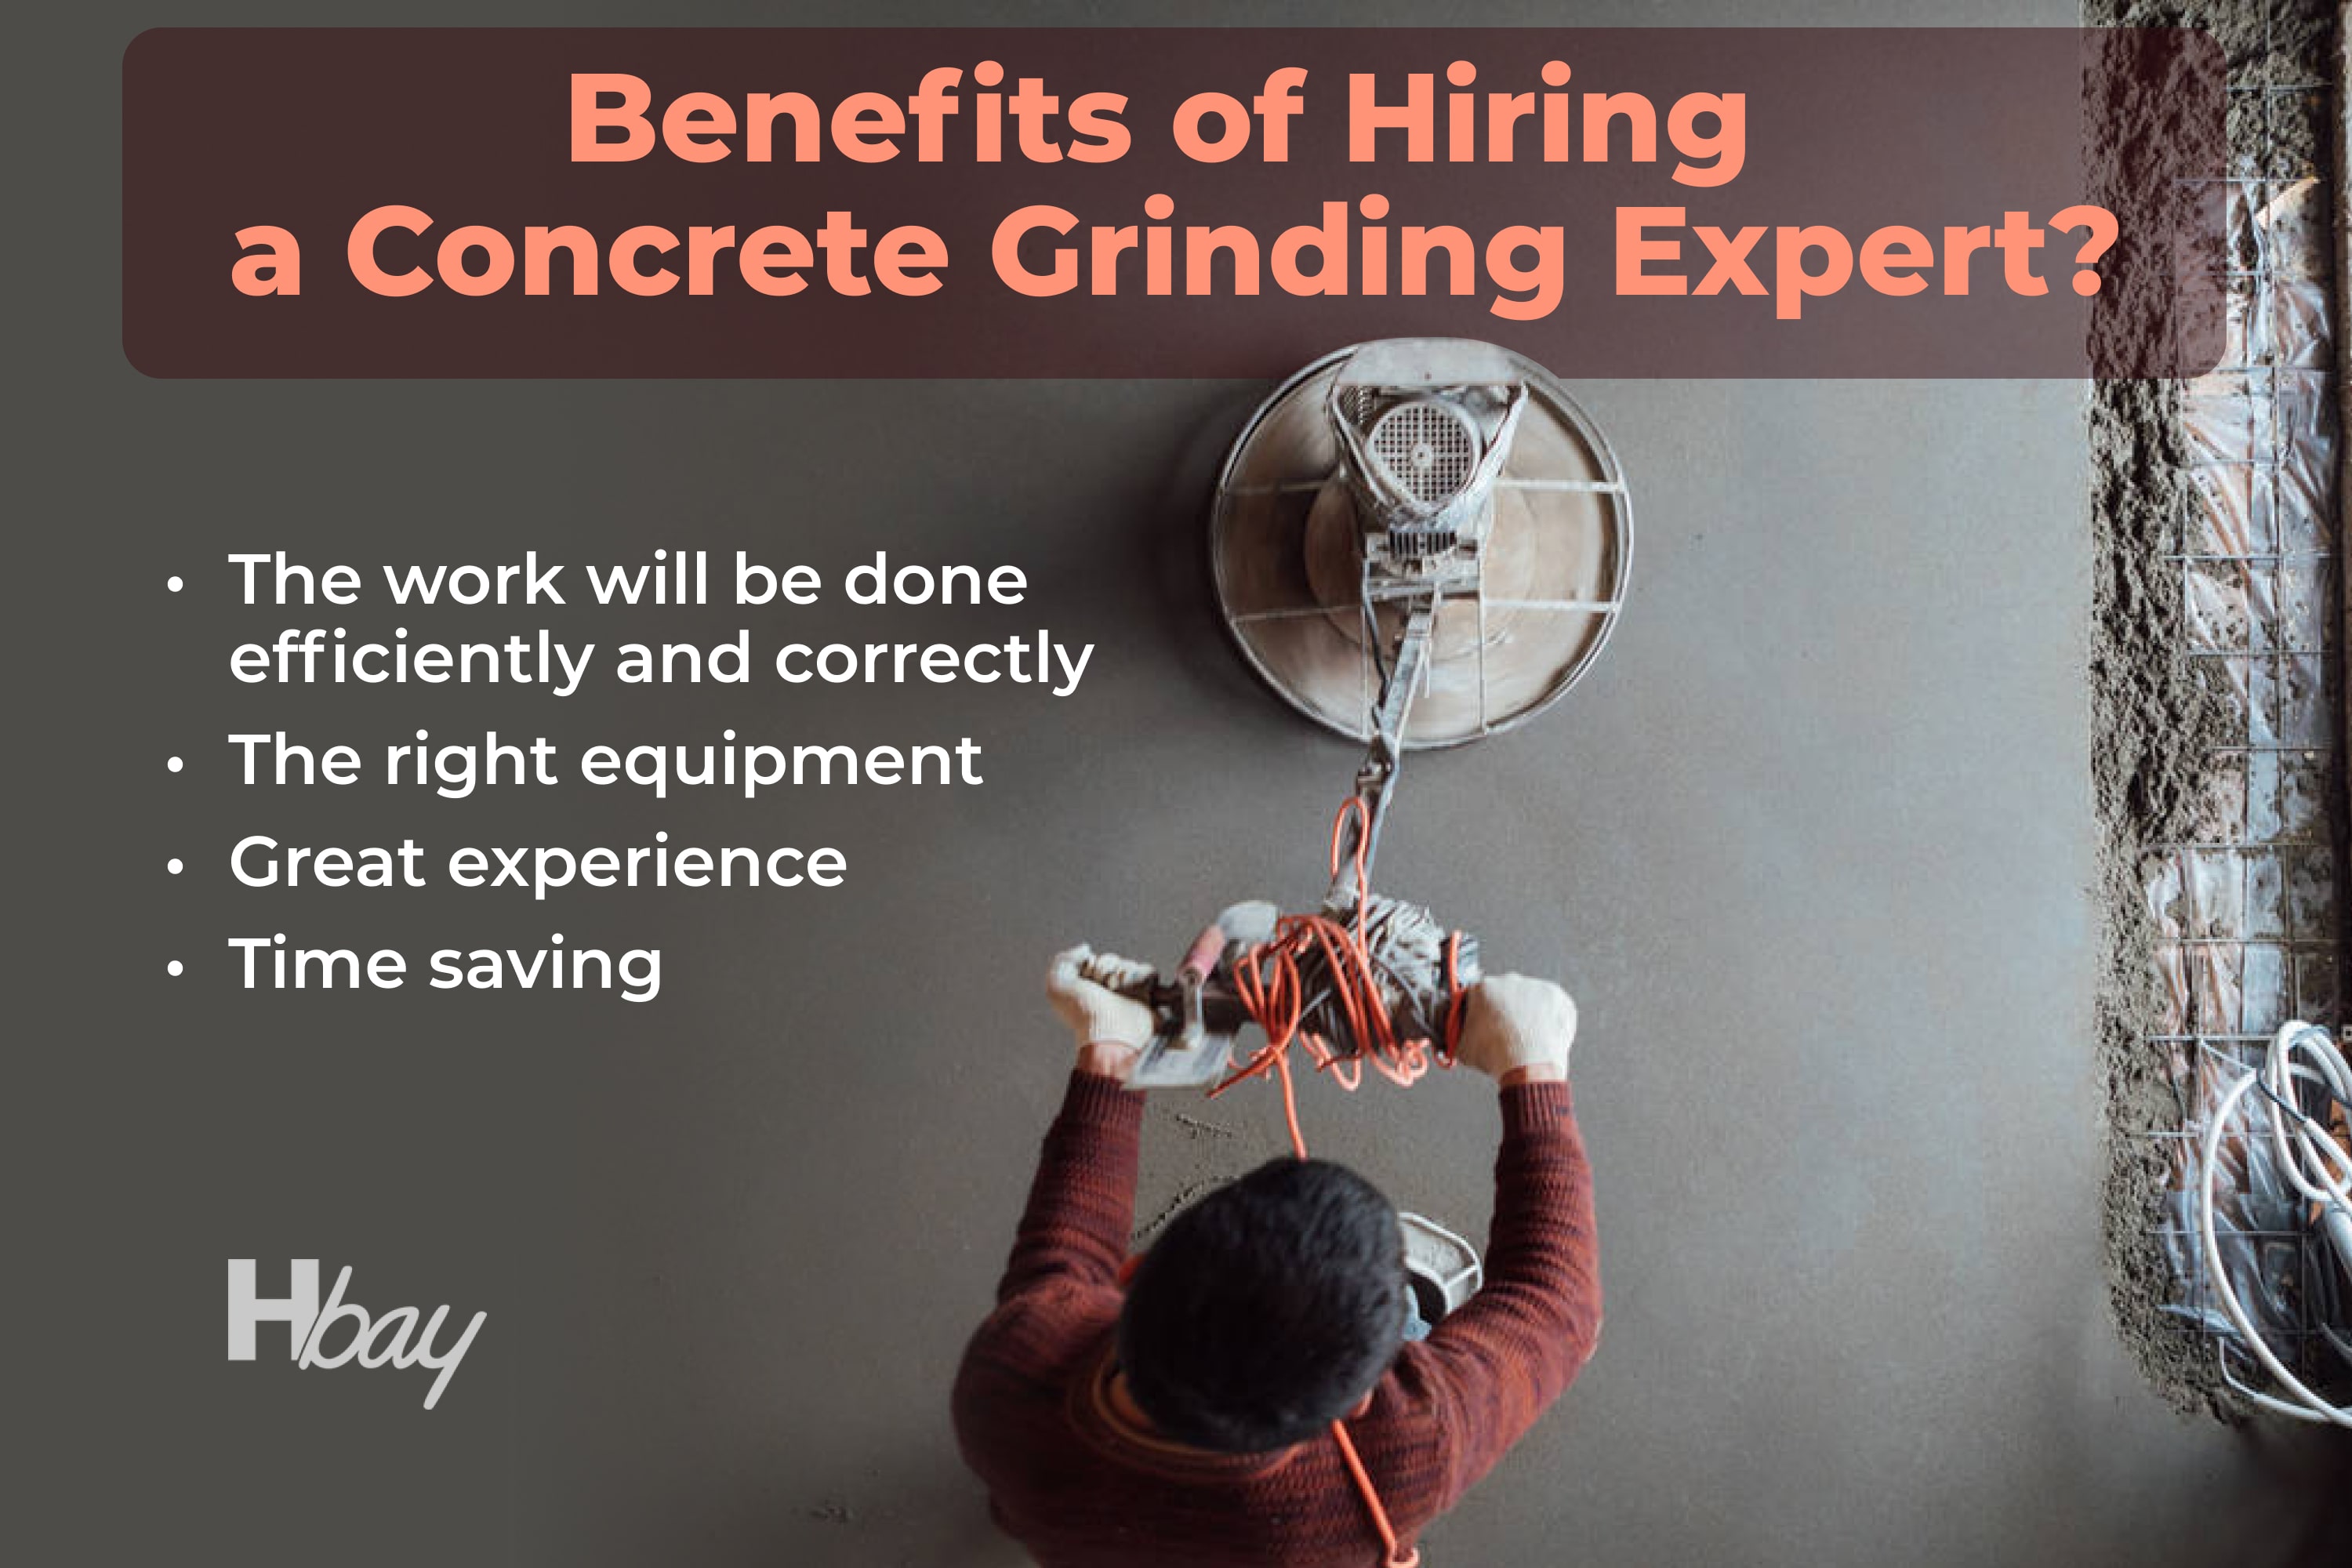 Benefits of Hiring a Concrete Grinding Expert